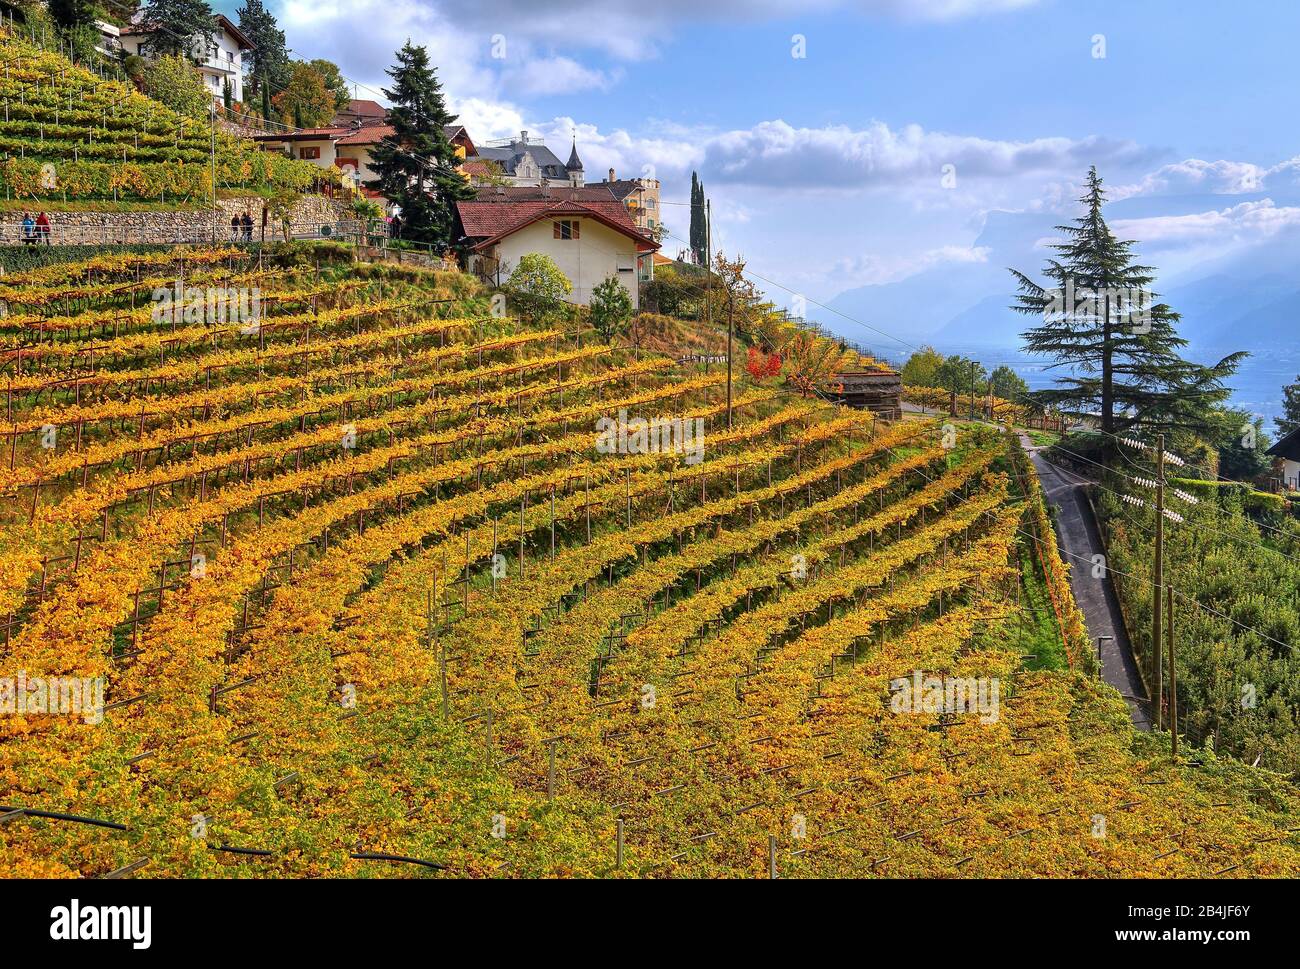 Vineyard at the edge of the village above the Adige Valley, Dorf Tirol, Burggrafenamt, South Tyrol, Italy Stock Photo